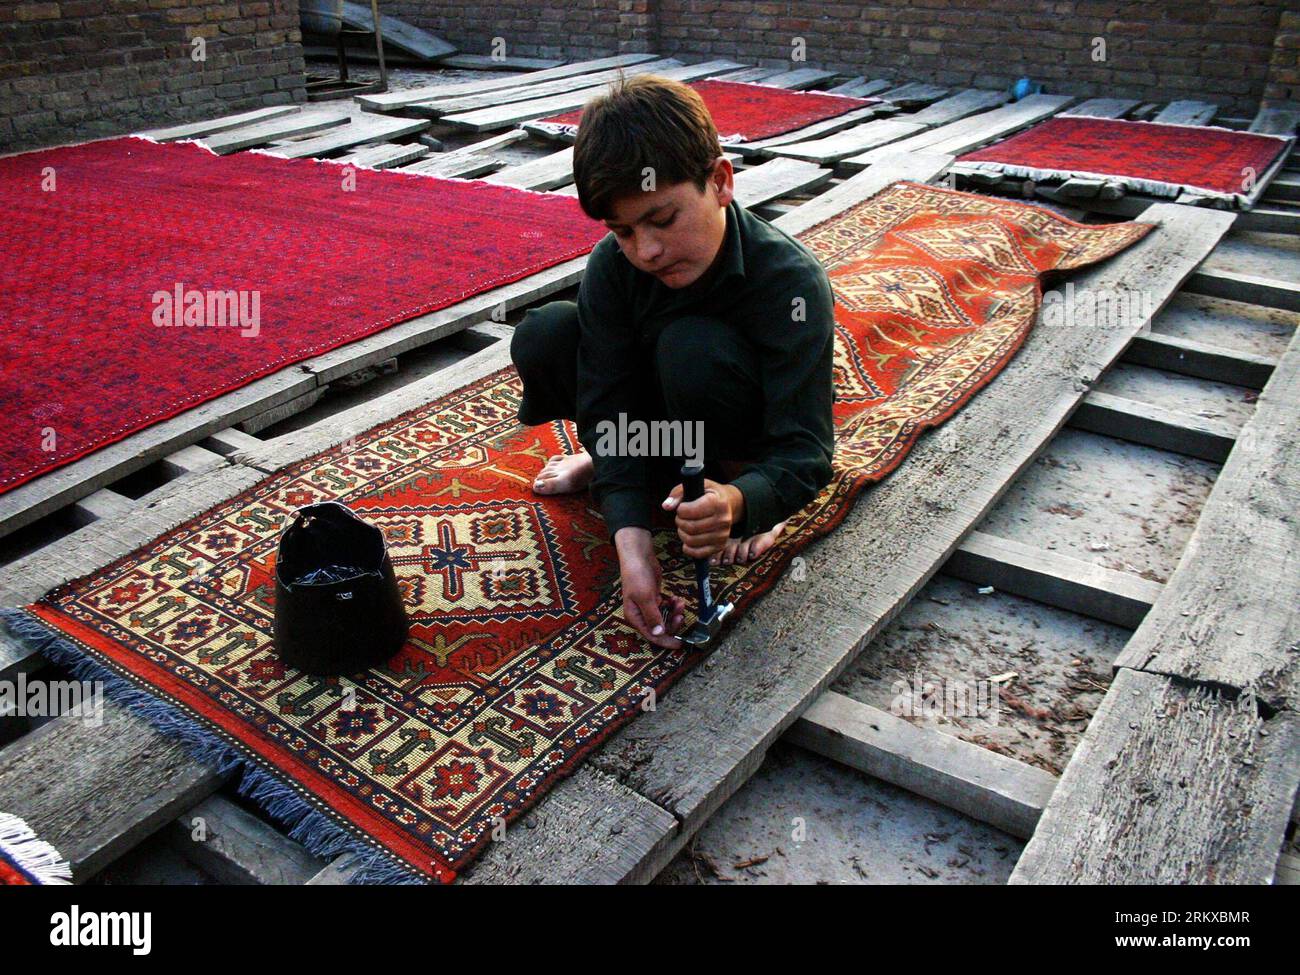 Bildnummer: 58936436  Datum: 20.12.2012  Copyright: imago/Xinhua (121220) -- PESHAWAR, Dec. 20, 2012 (Xinhua) -- A Pakistani boy crafts a hand-made carpet at a local carpet factory in northwest Pakistan s Peshawar, Dec. 20, 2012. According to reports, Pakistan s carpet exports have witnessed a huge decline of more than 50 percent during the last five years. (Xinhua/Ahmad Sidique) (zf) PAKISTAN-PESHAWAR-CARPET EXPORTS-DECREASE PUBLICATIONxNOTxINxCHN Wirtschaft Arbeit Teppich Fabrik Teppichfabrik x0x xdd 2012 quer      58936436 Date 20 12 2012 Copyright Imago XINHUA  Peshawar DEC 20 2012 XINHUA Stock Photo